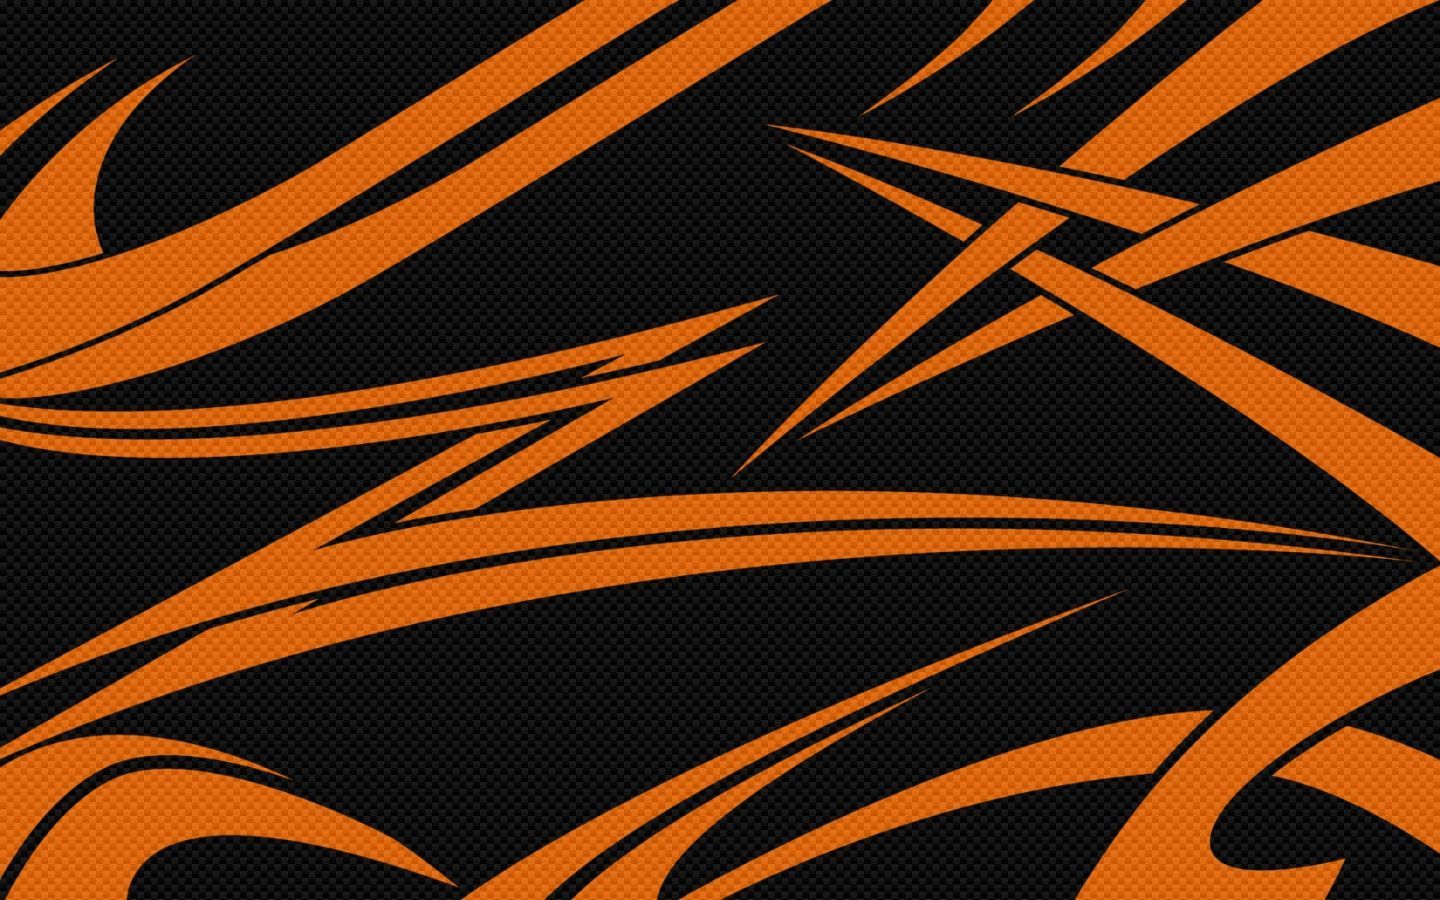 Black Orange Background Images  Free Download on Freepik